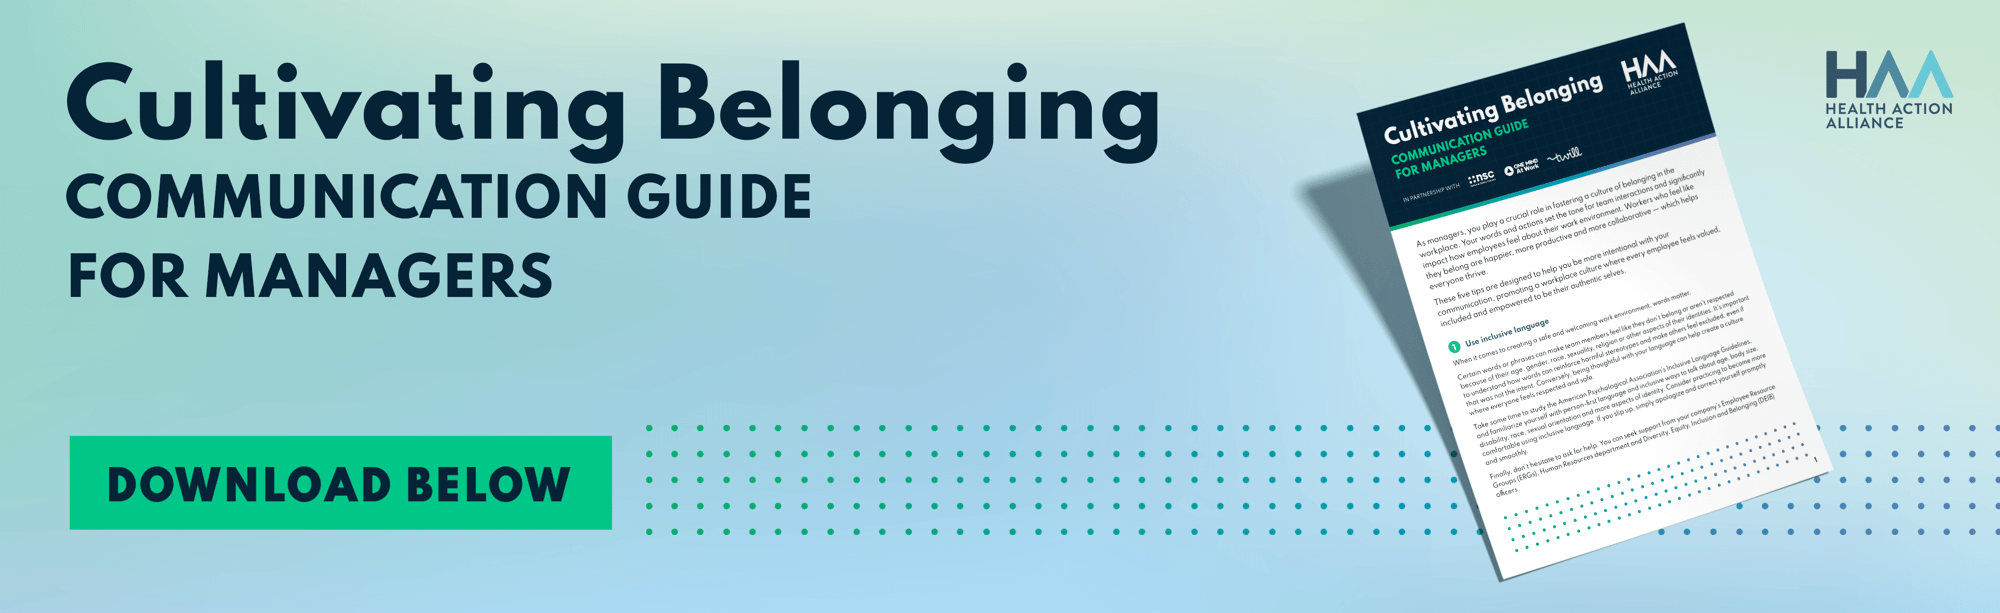 Hubspot Landing Page Banner_Cultivating Belonging